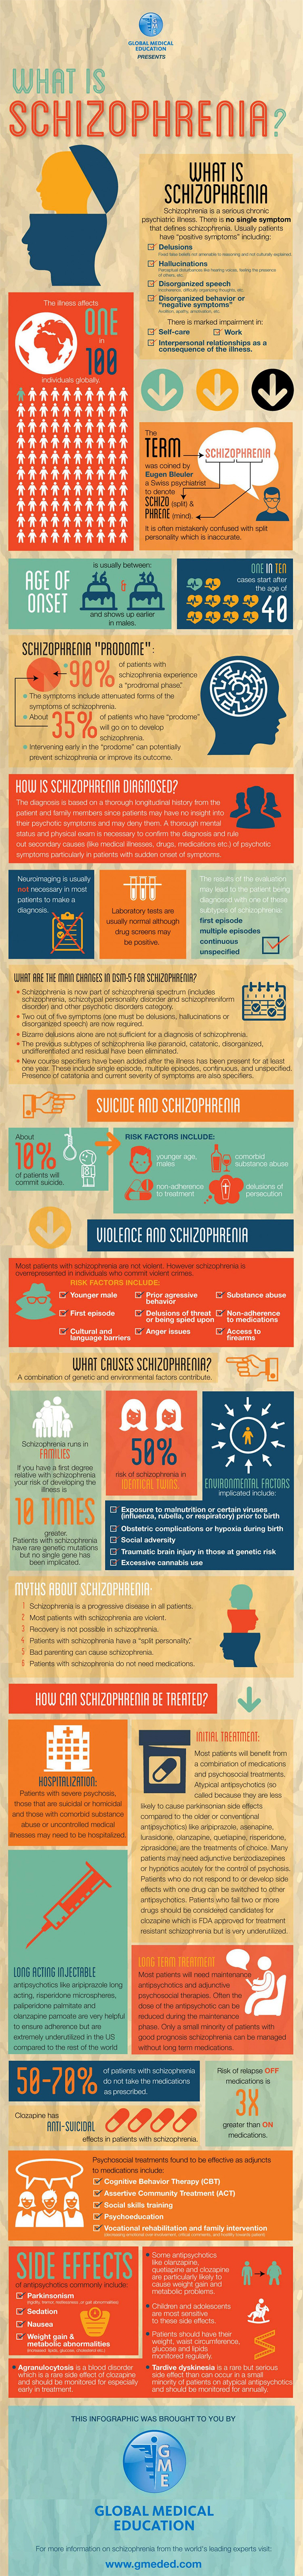 schizophrenia infographic